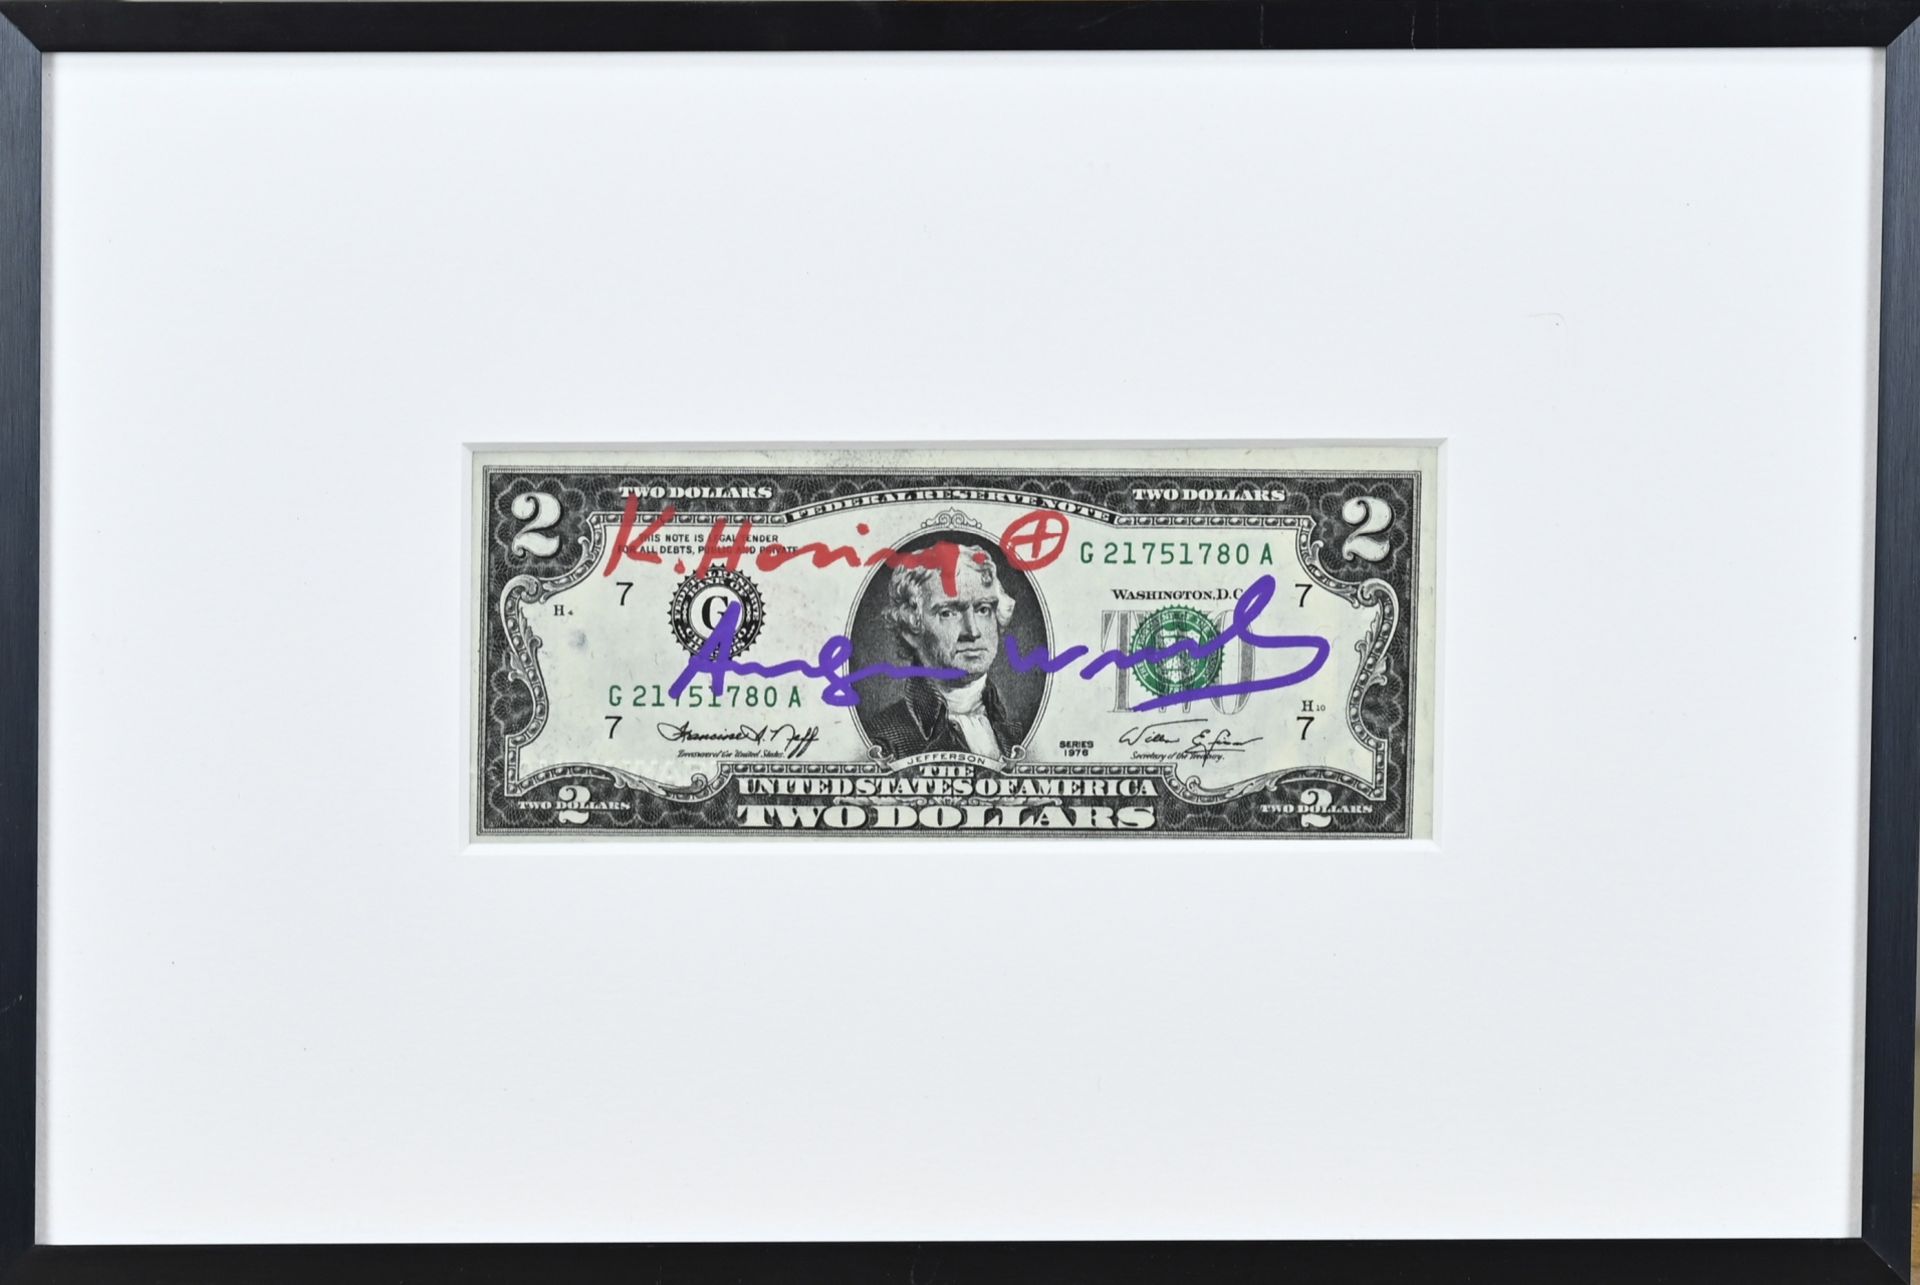 K. Haring/A. Warhol, 2 Dollar bill